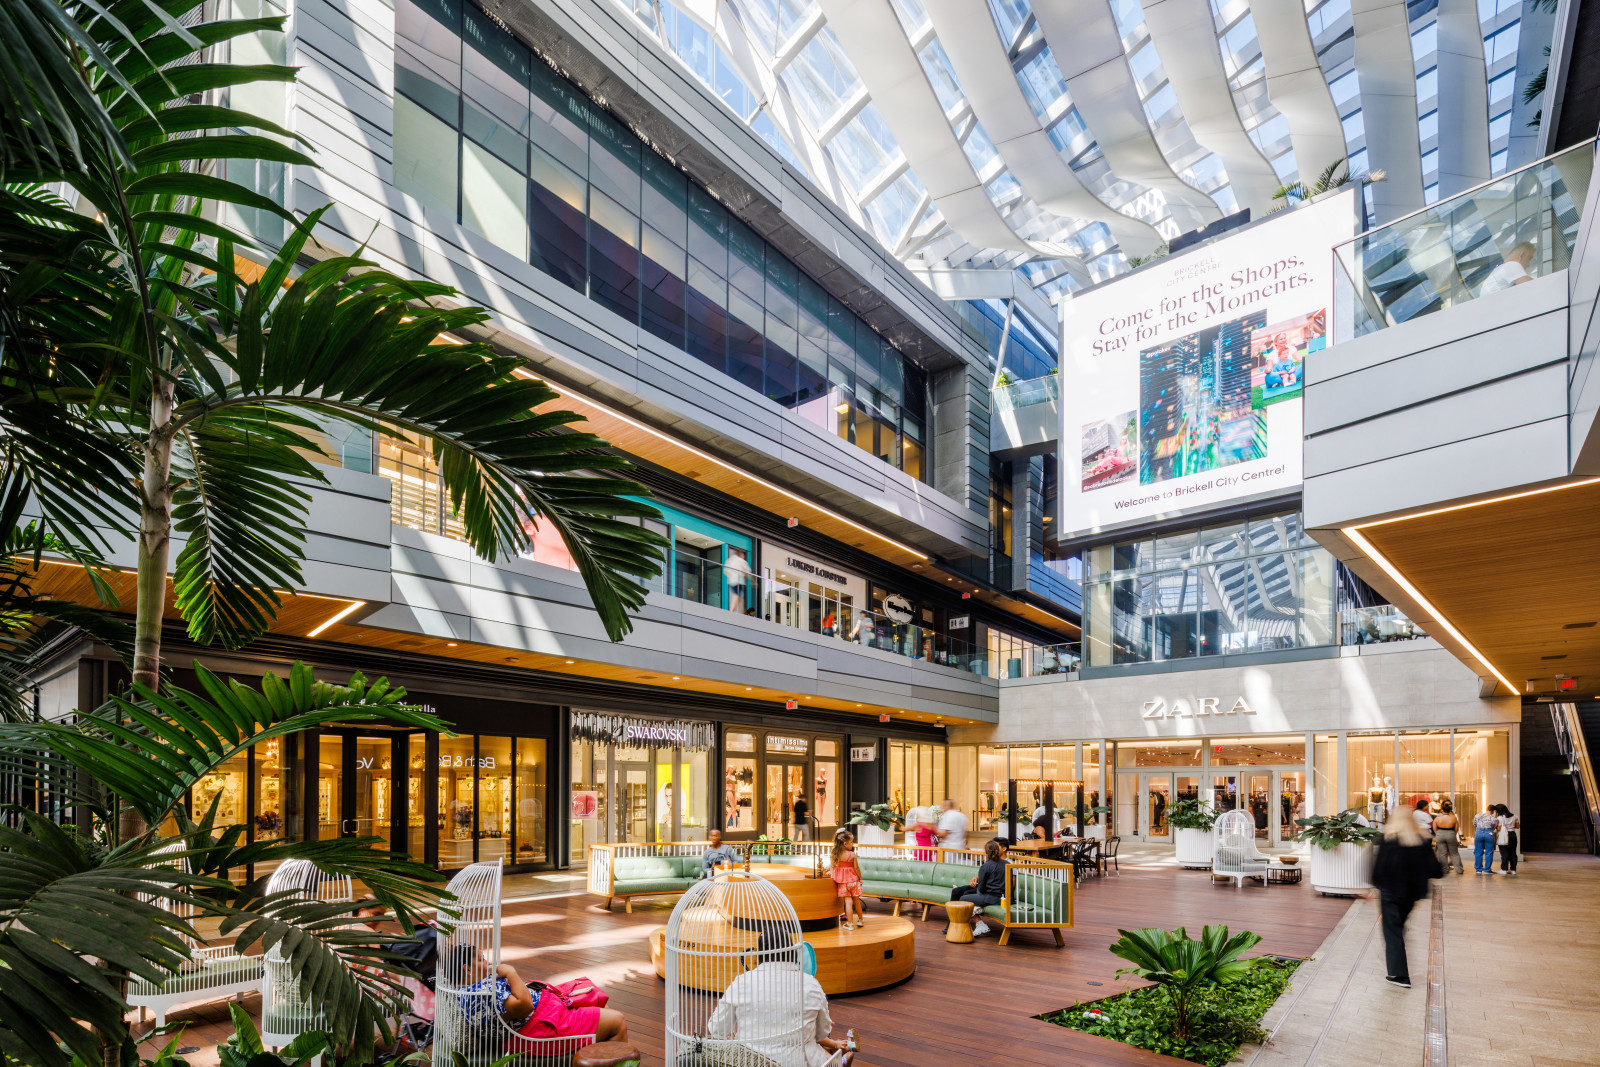 Brickell City Centre Shopping Mall in Downtown Miami, Miami, Florida  Editorial Photography - Image of centre, scene: 179503707